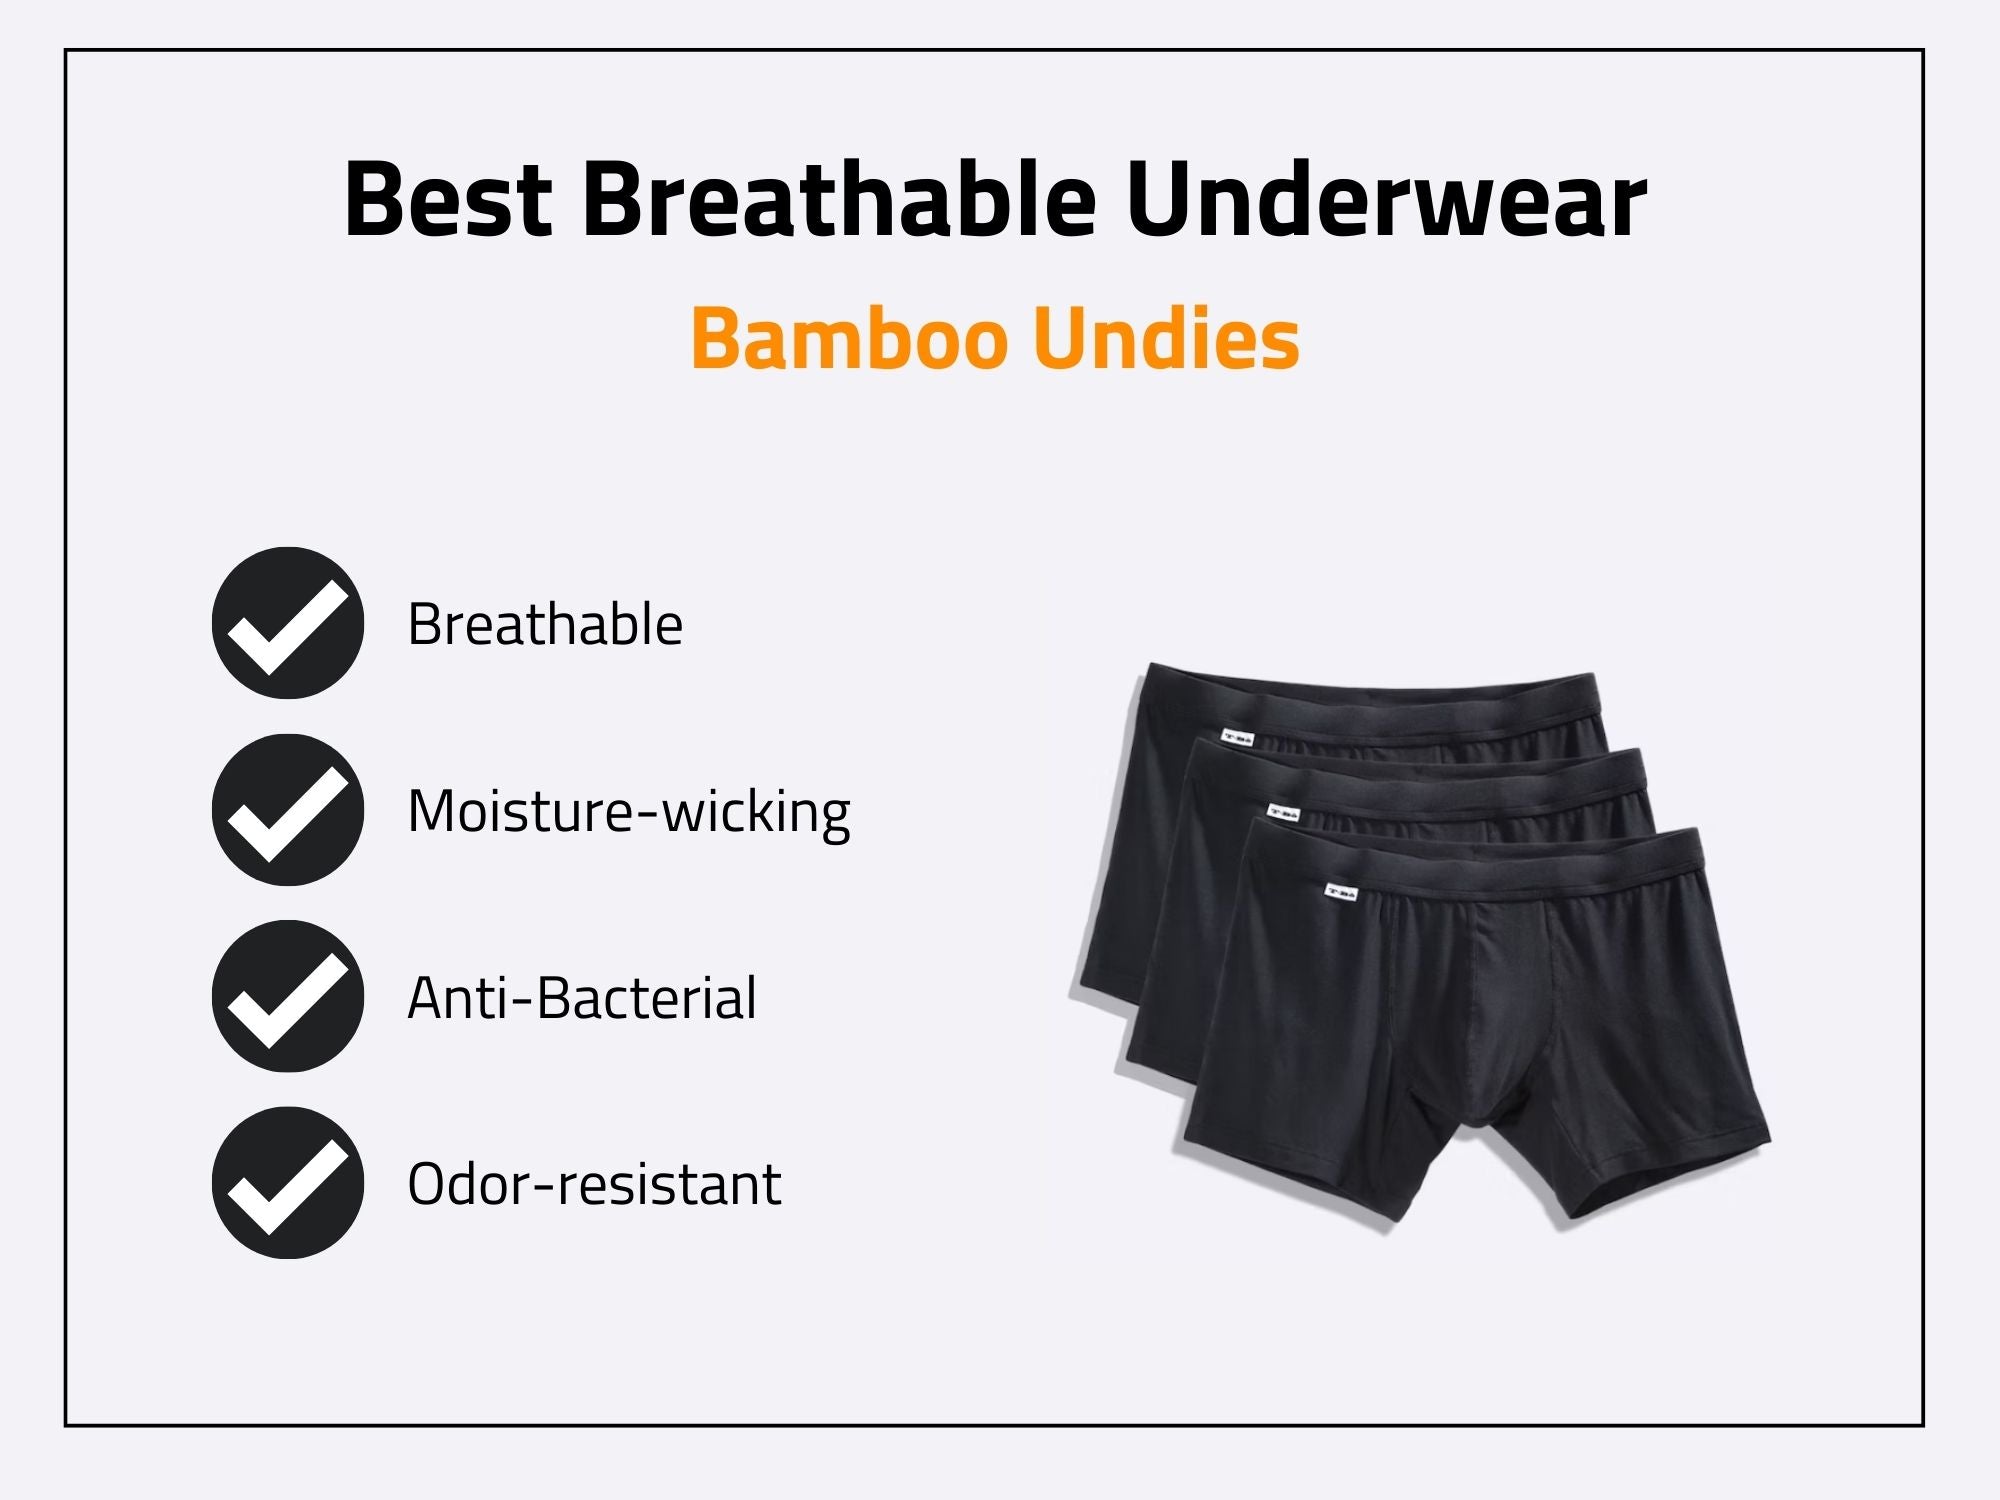 Benefits of Bamboo Underwear